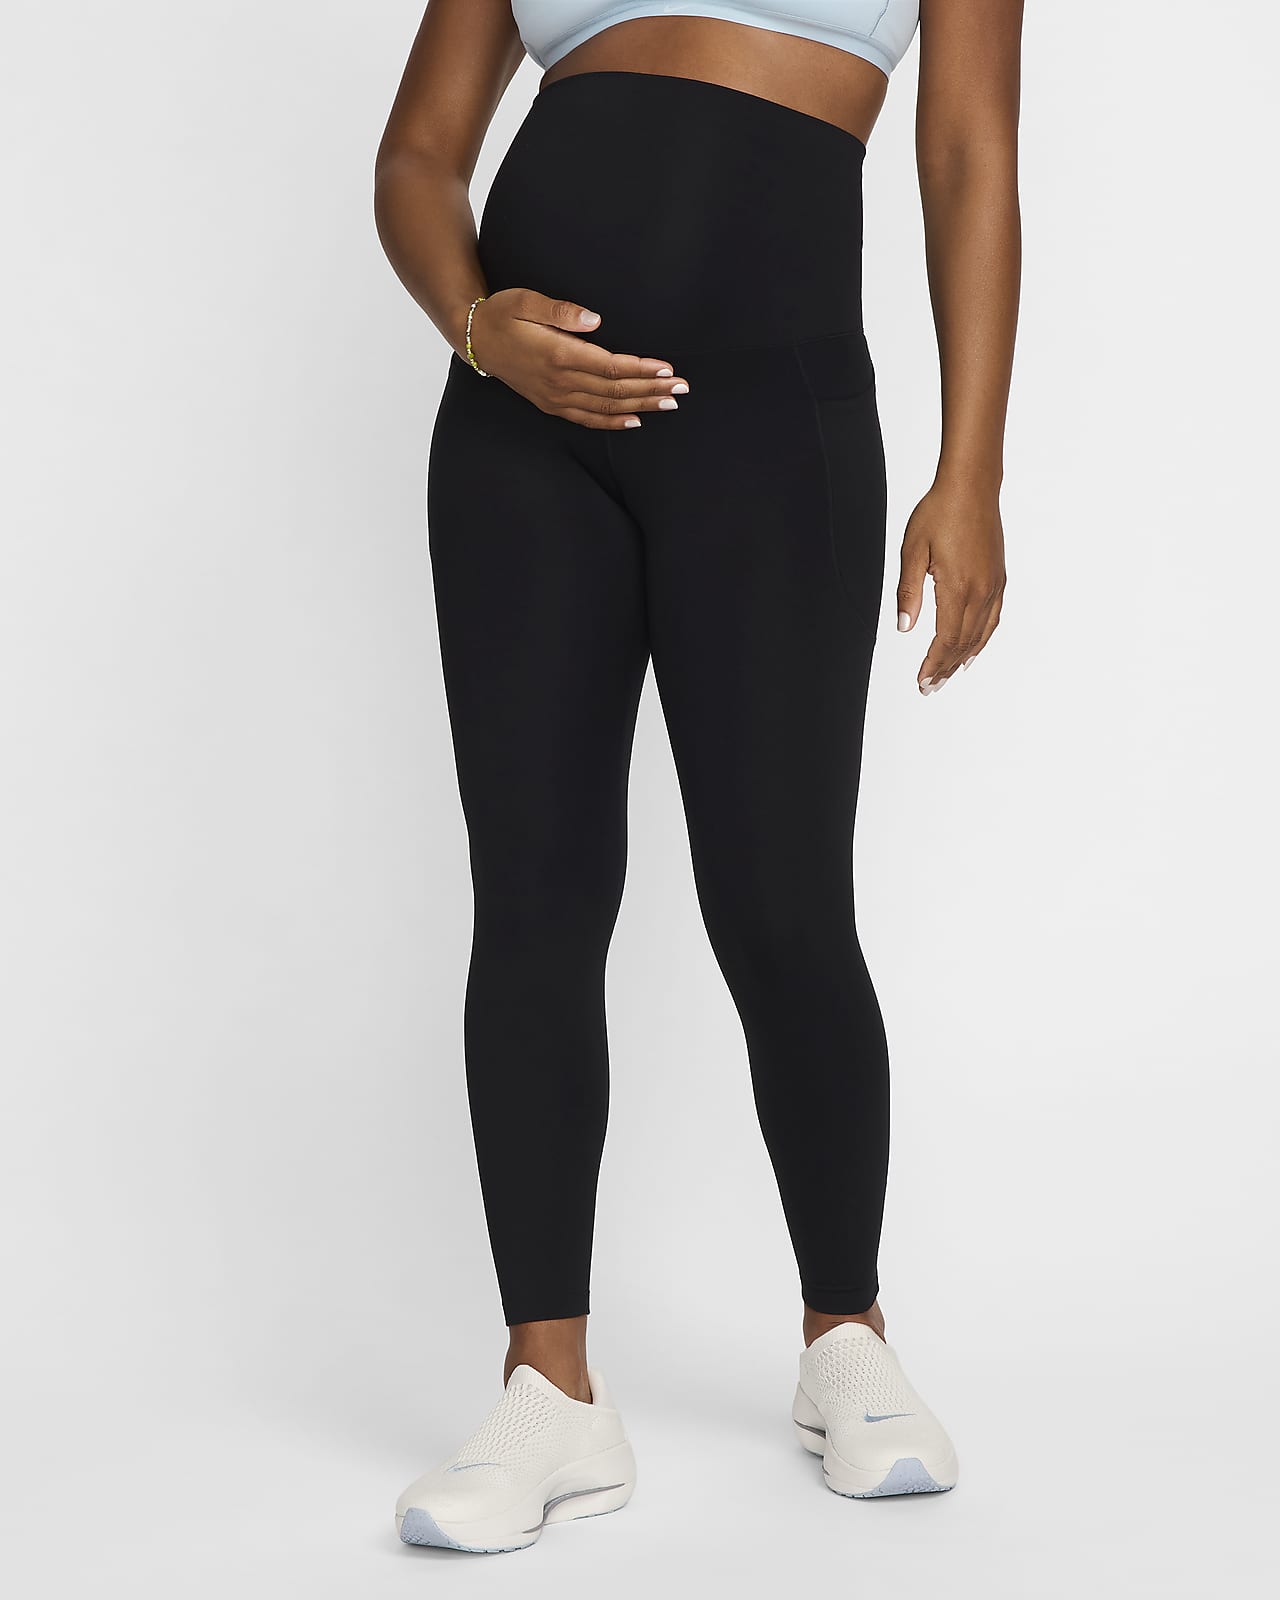 Nike (M) One Leggings de 7/8 y talle alto con bolsillos (Maternity) - Mujer